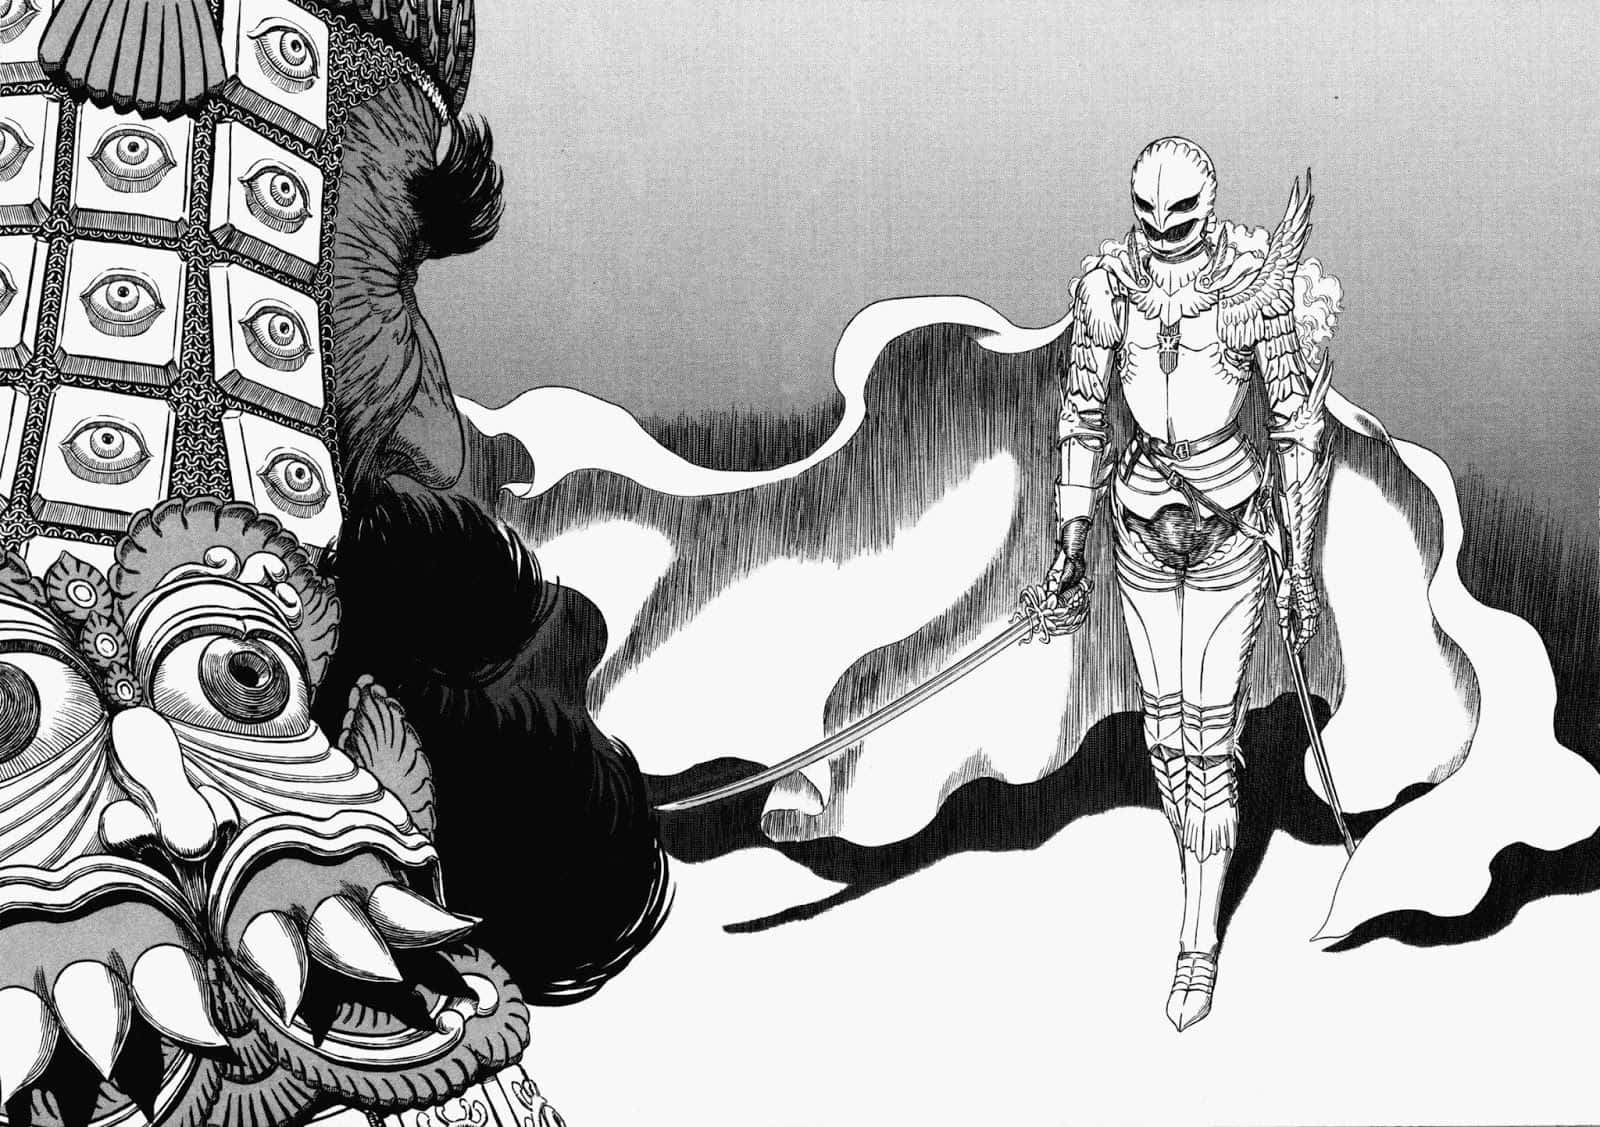 Guts, mercenary swordsman and protagonist of the Berserk manga series. Wallpaper